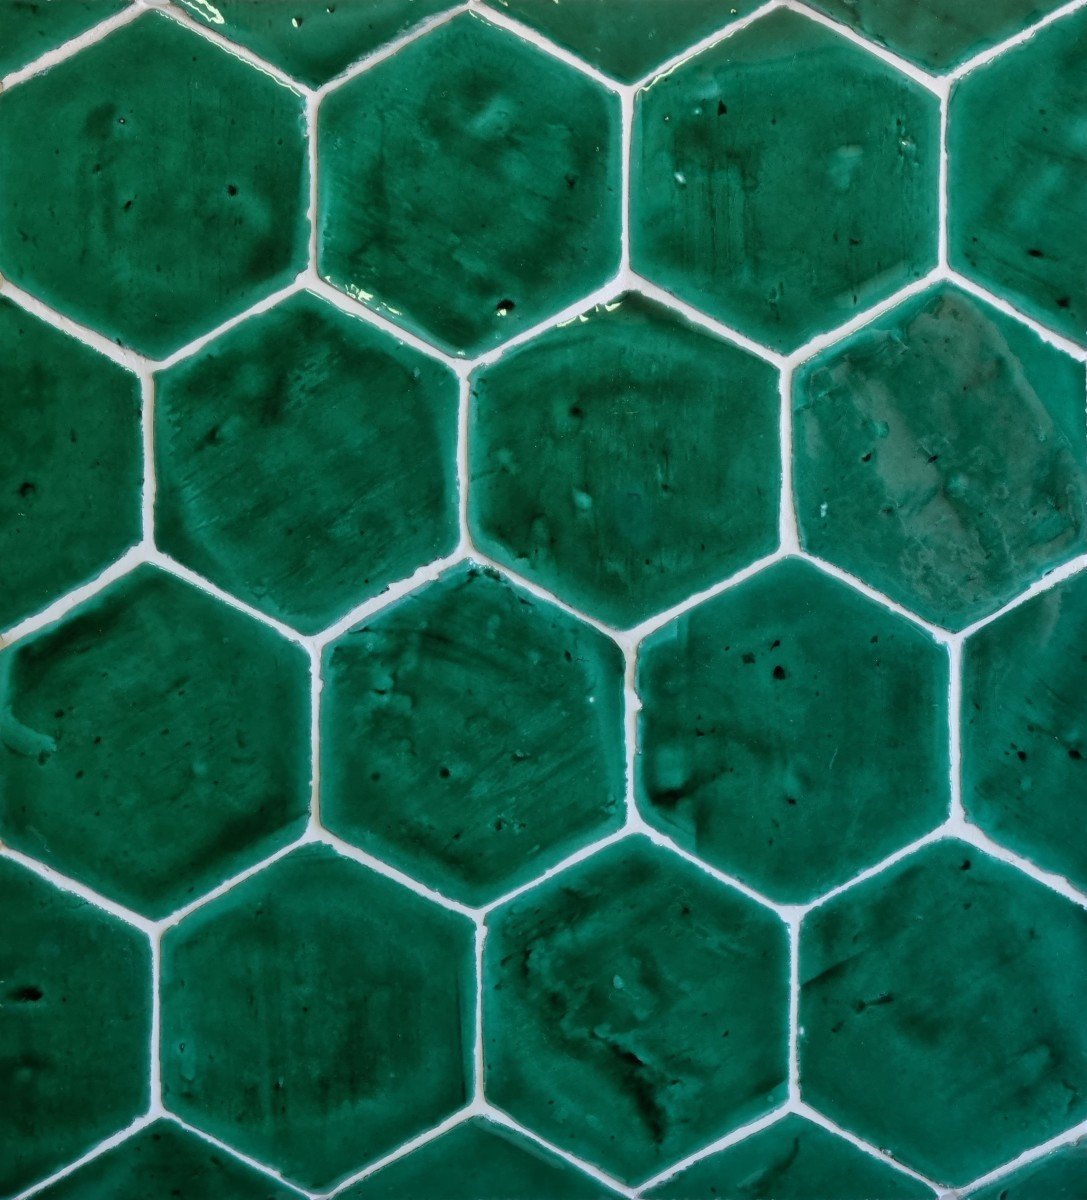 Glasierte Terracotta Wandfliesen - Farbe Grün, Referenz G305 - Format 11x12,5 cm, hexagonal